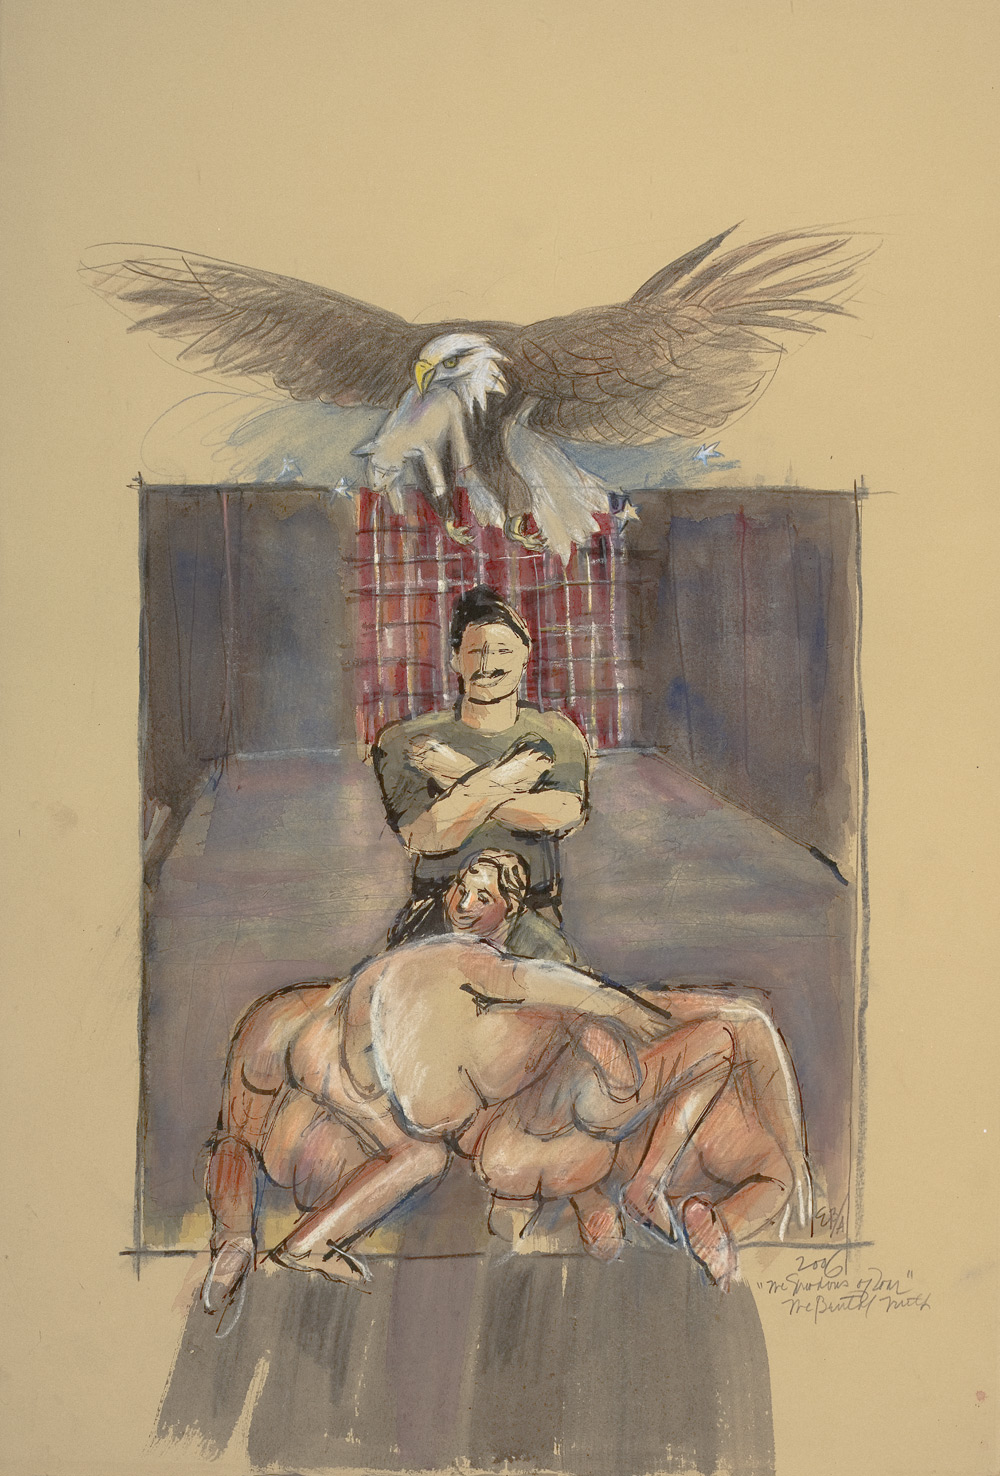 Abu Ghraib #6, mixed media on paper, 22" x 15", 2006